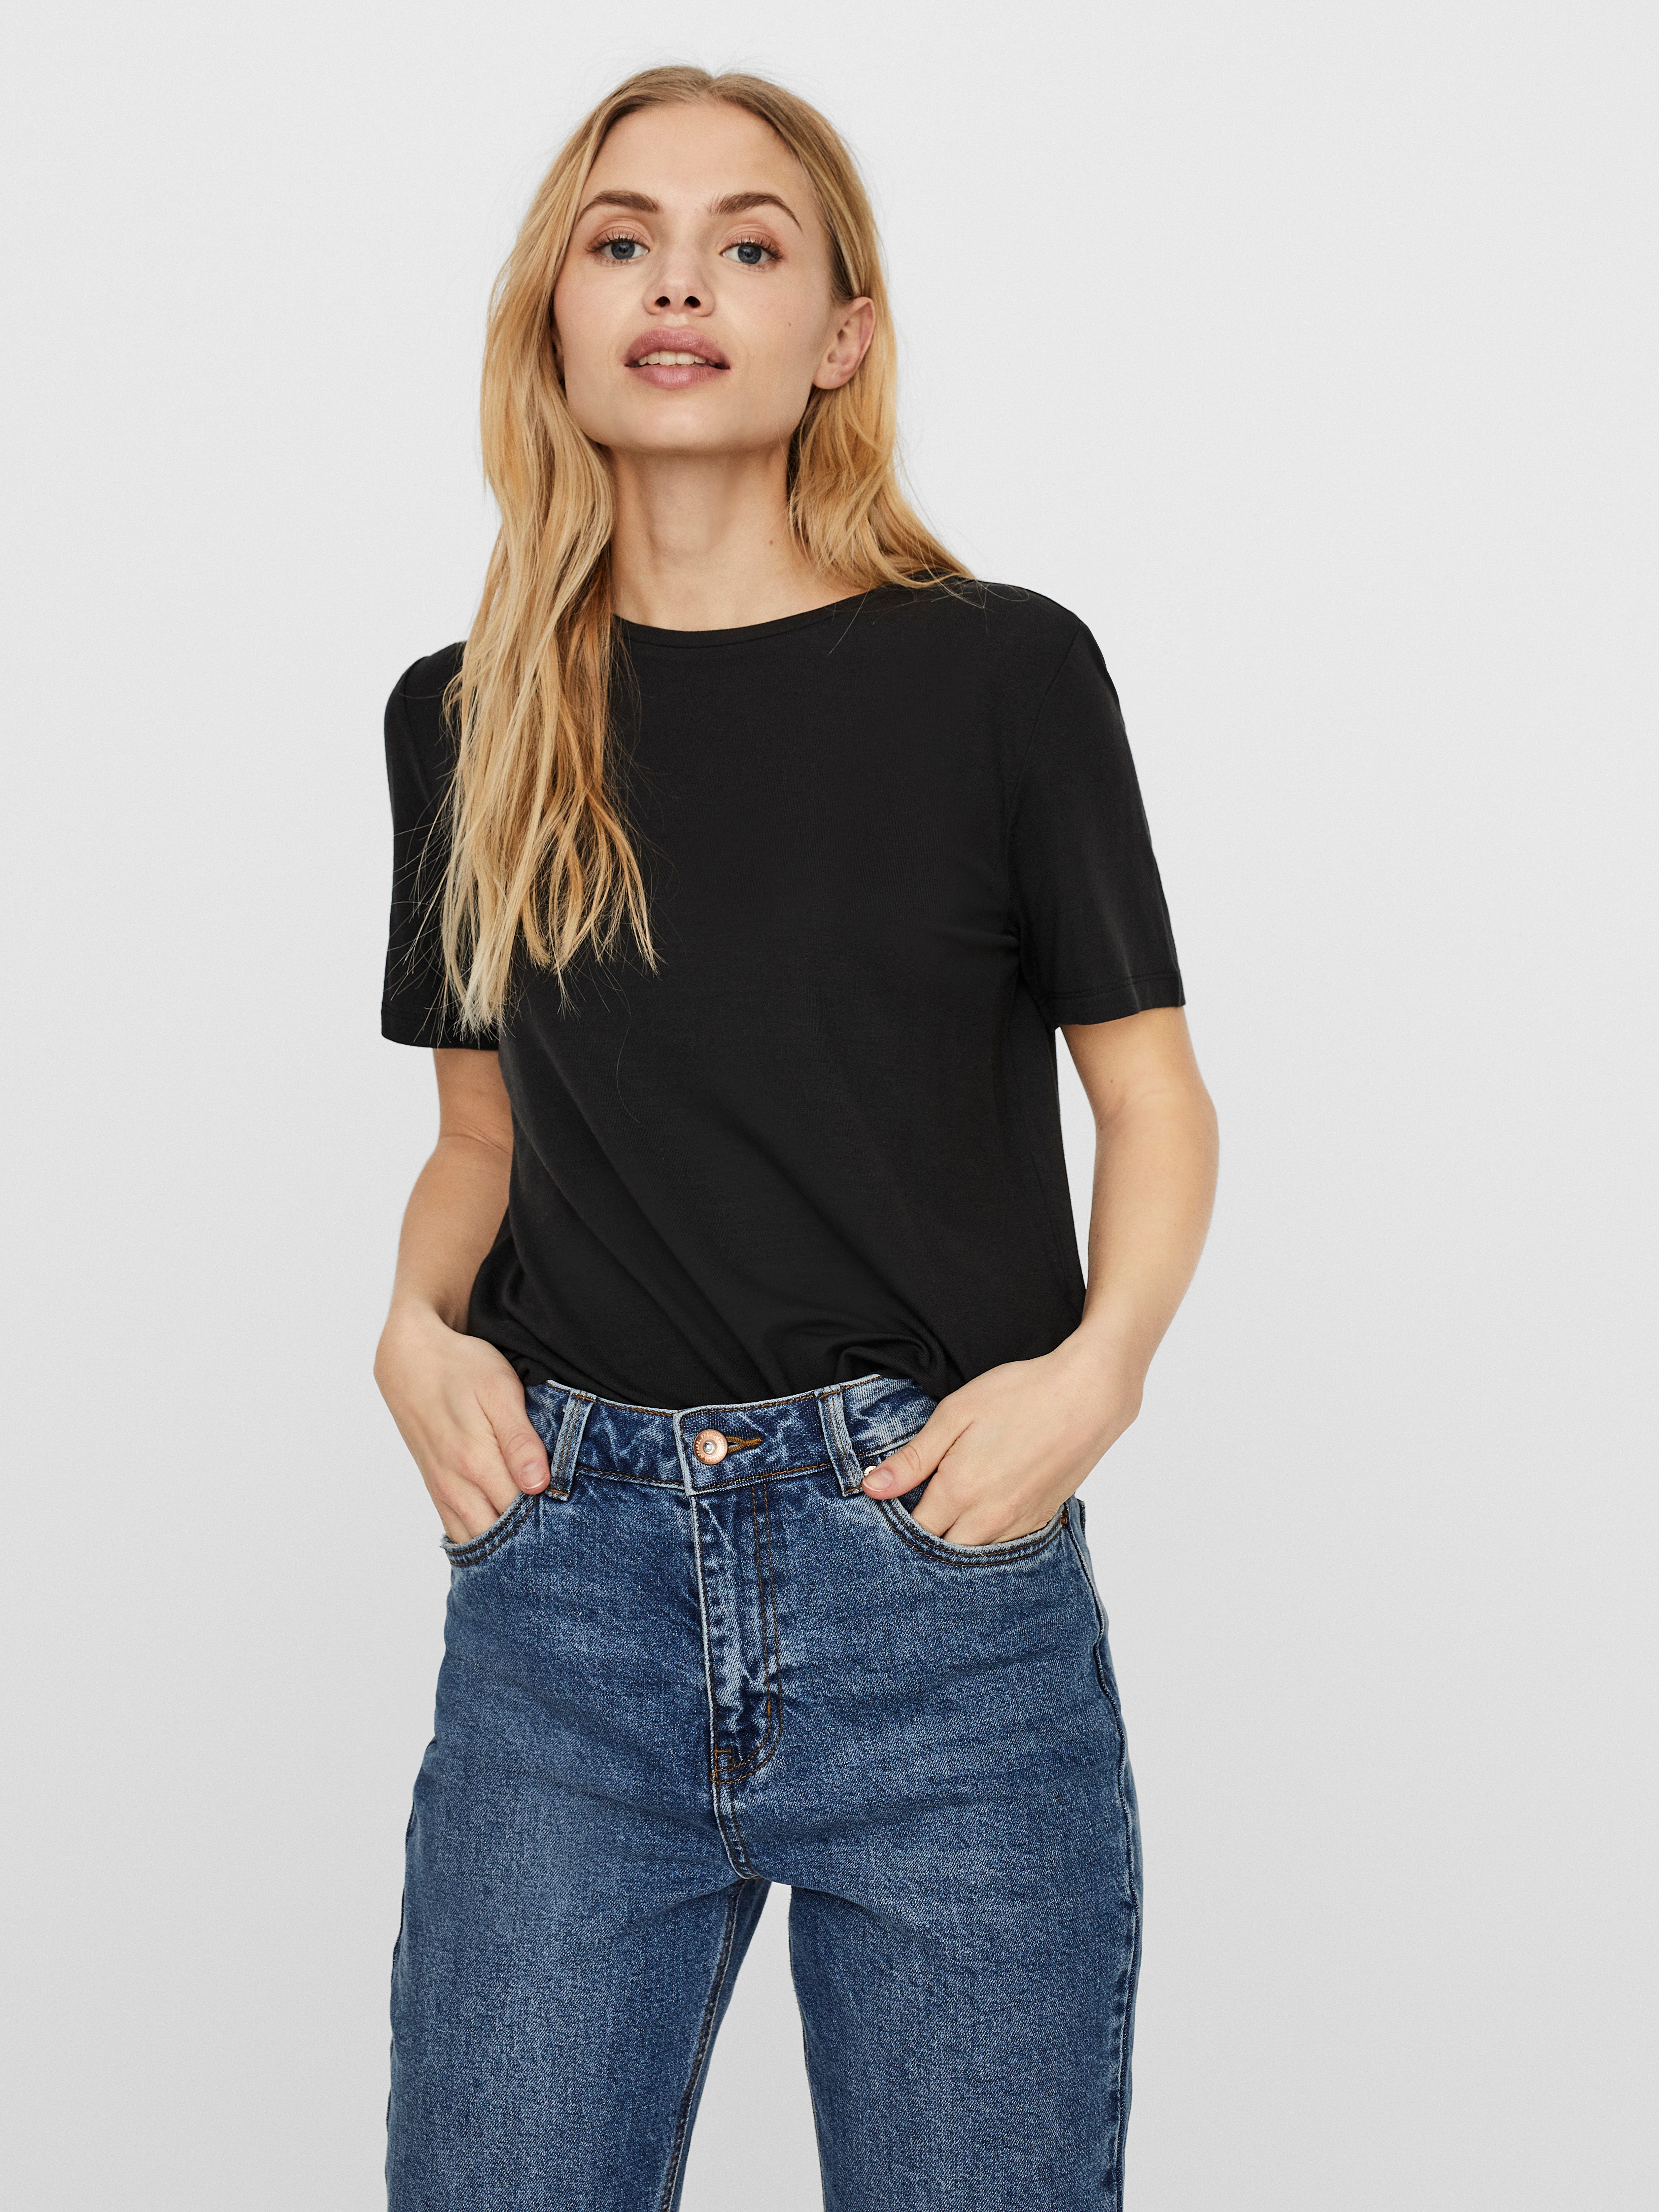 discount 63% WOMEN FASHION Shirts & T-shirts Elegant Vero Moda Shirt Black M 